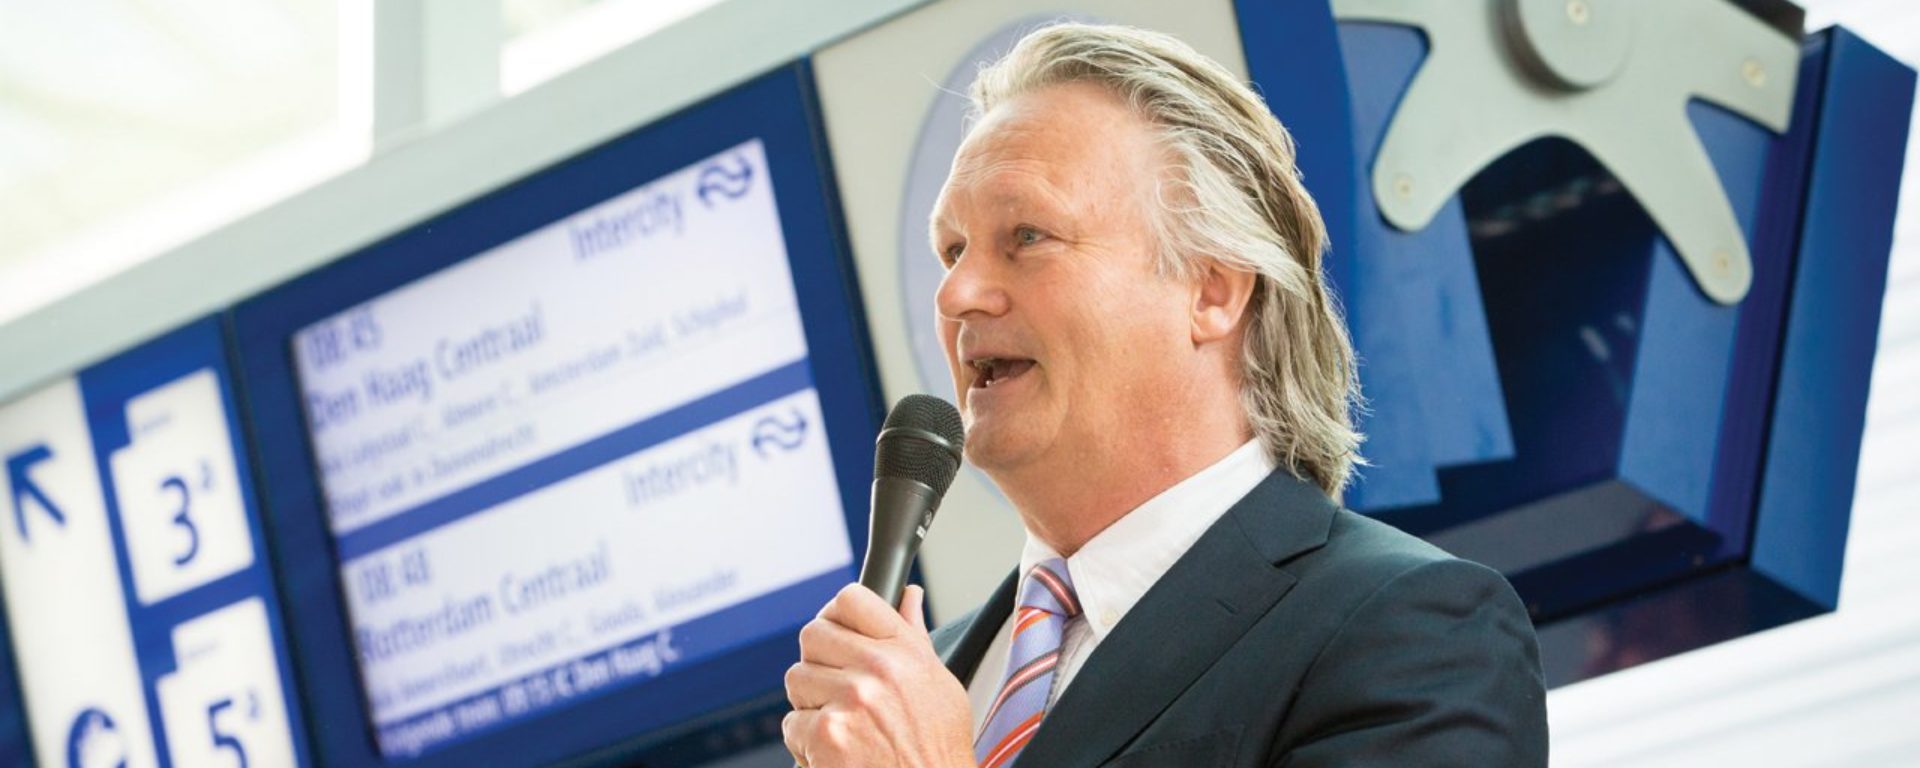 Pier Eringa CEO Transdev Netherlands speaker station